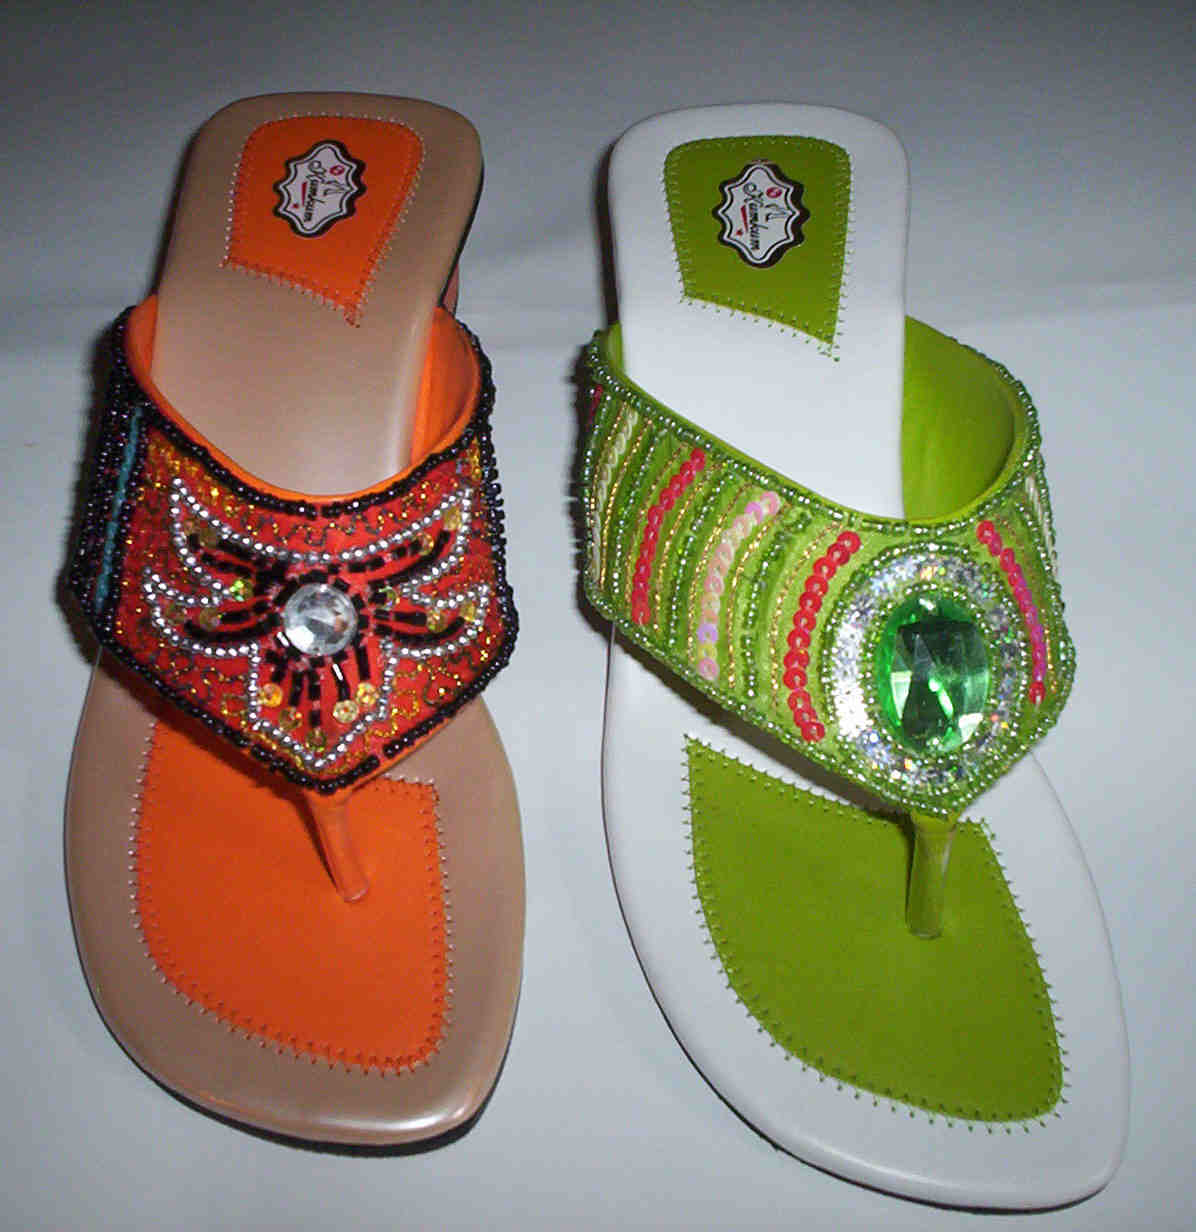  Ladies Fashion Sandals (Дамы мод Сандалии)